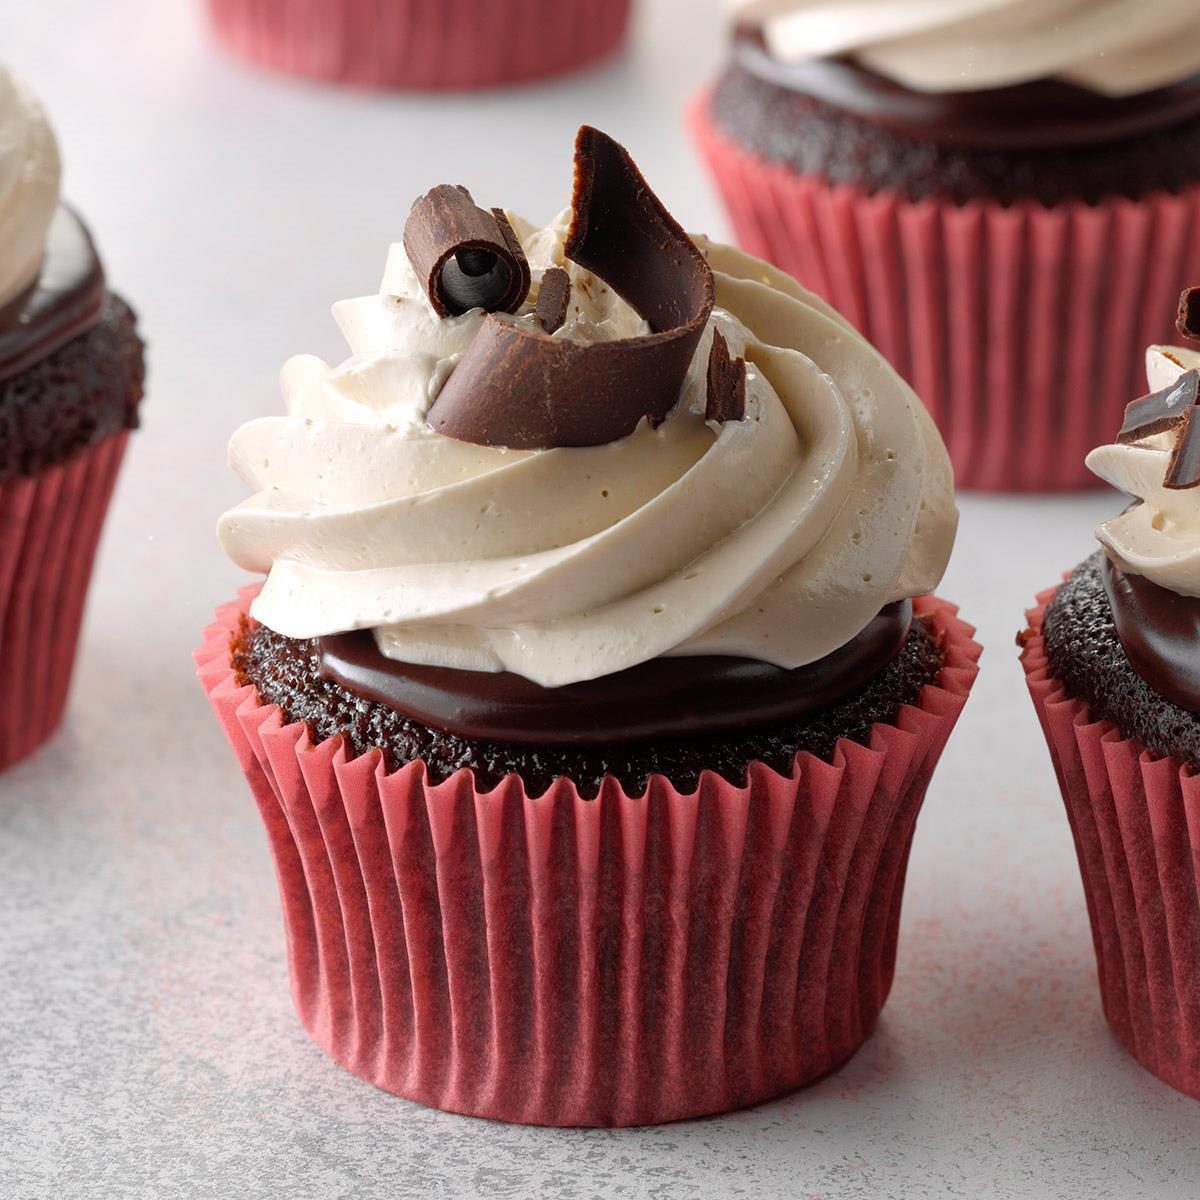 Chocolate Ganache Peanut Butter Cupcakes Recipe | Taste of Home